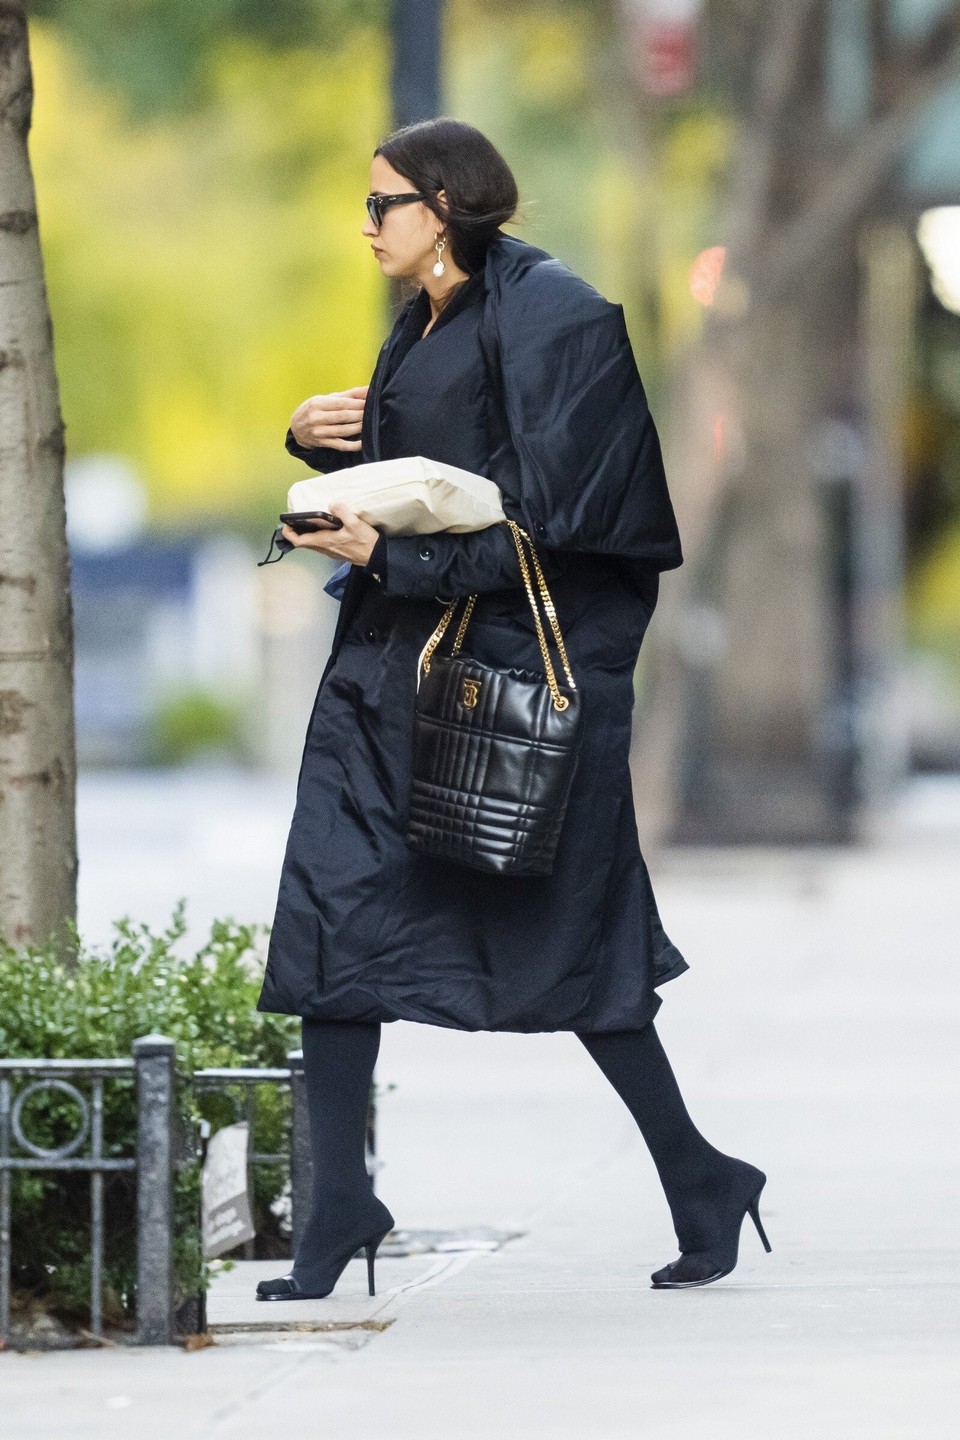 Irina Shayk Hot At Fashion Trust Arabia And Next To Bradley Cooper's House